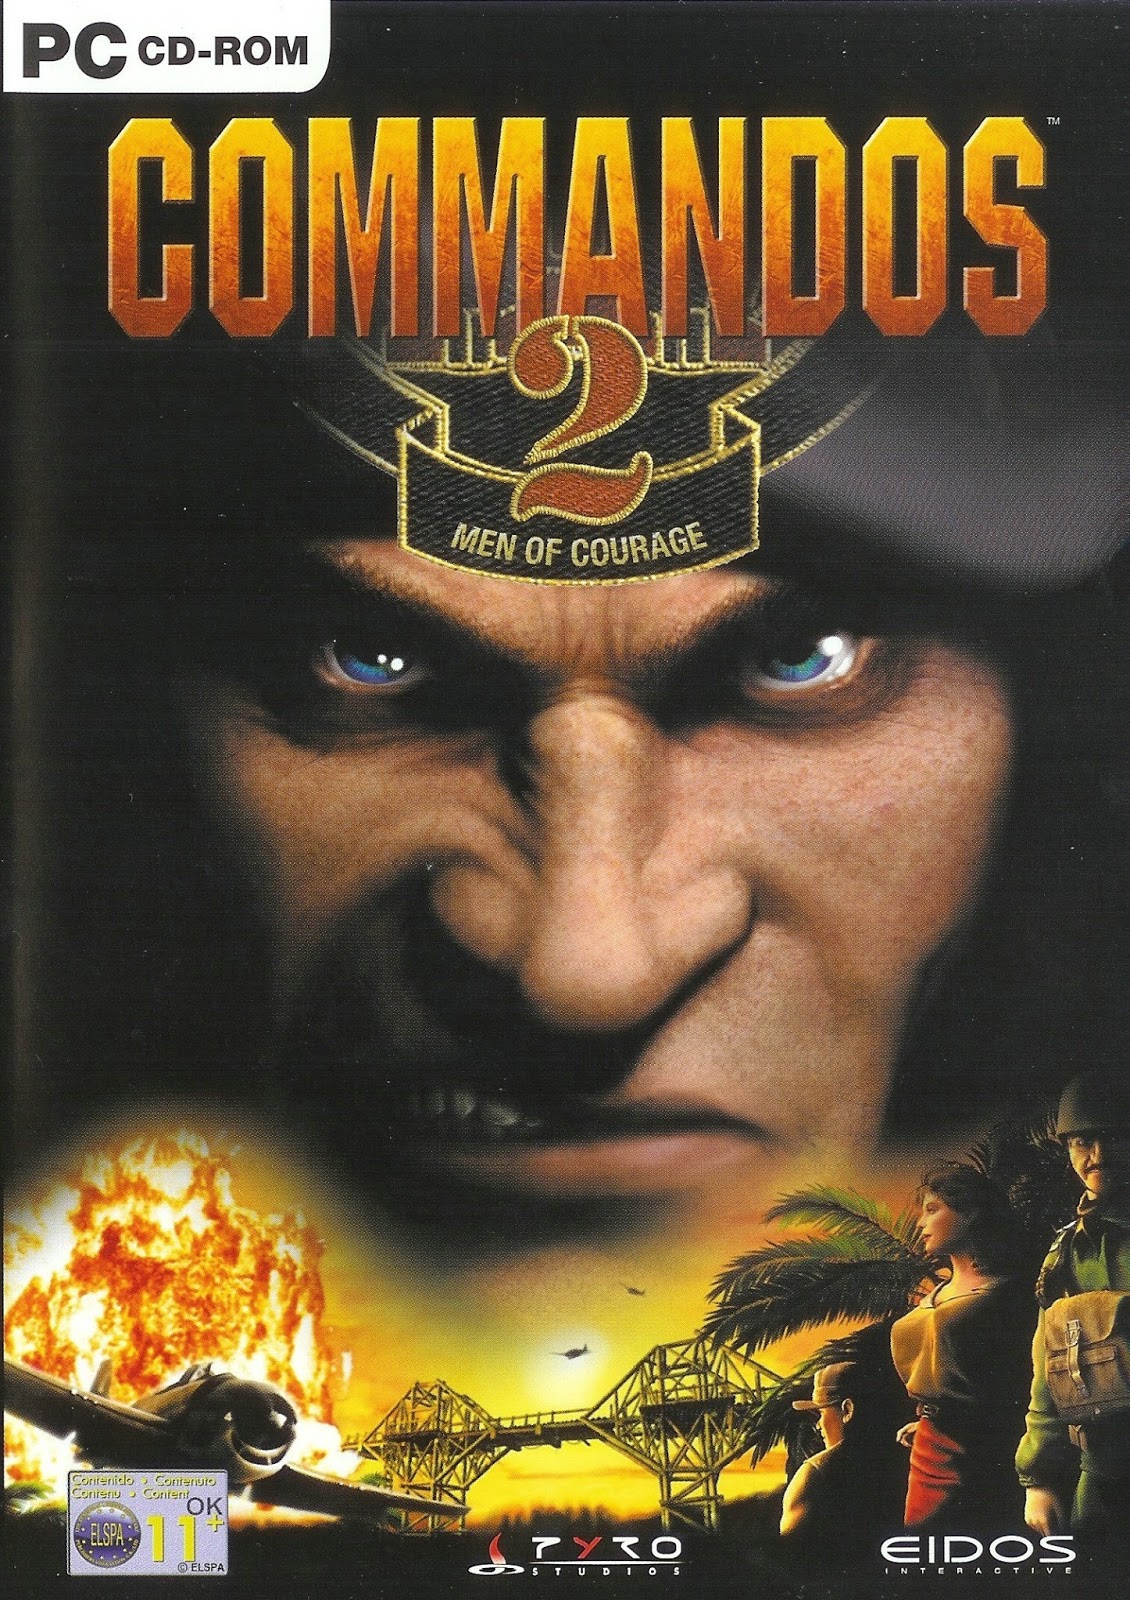 mission commando game free download